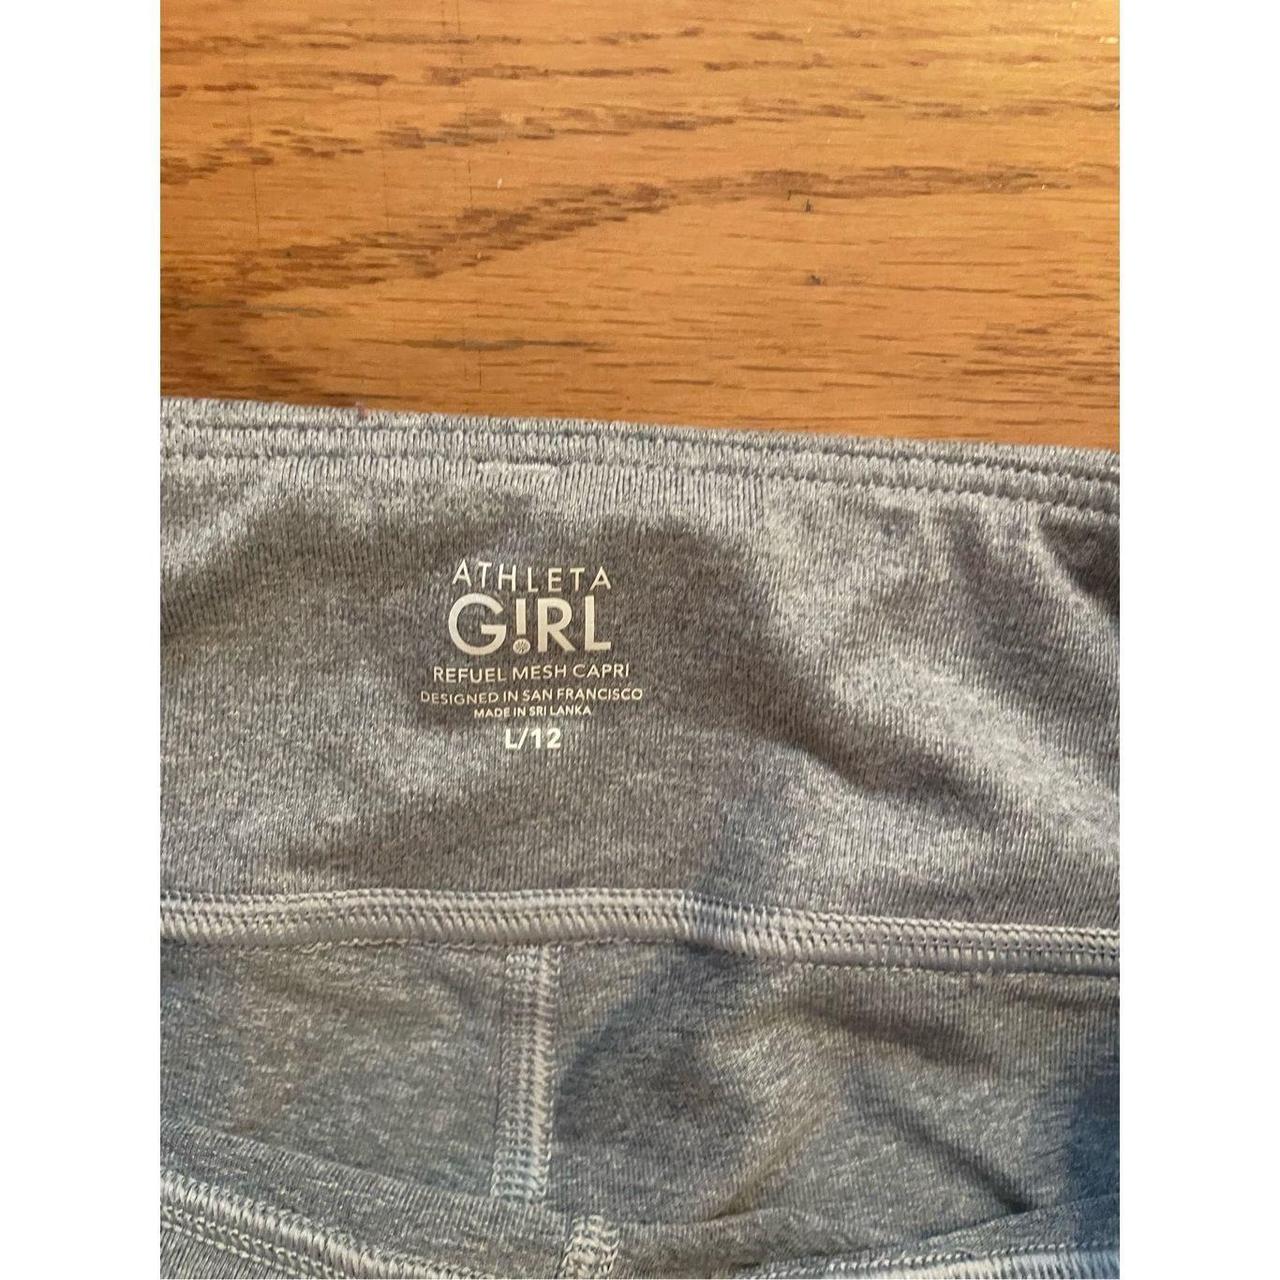 Athleta Girls grey leggings. Perfect for sports, - Depop